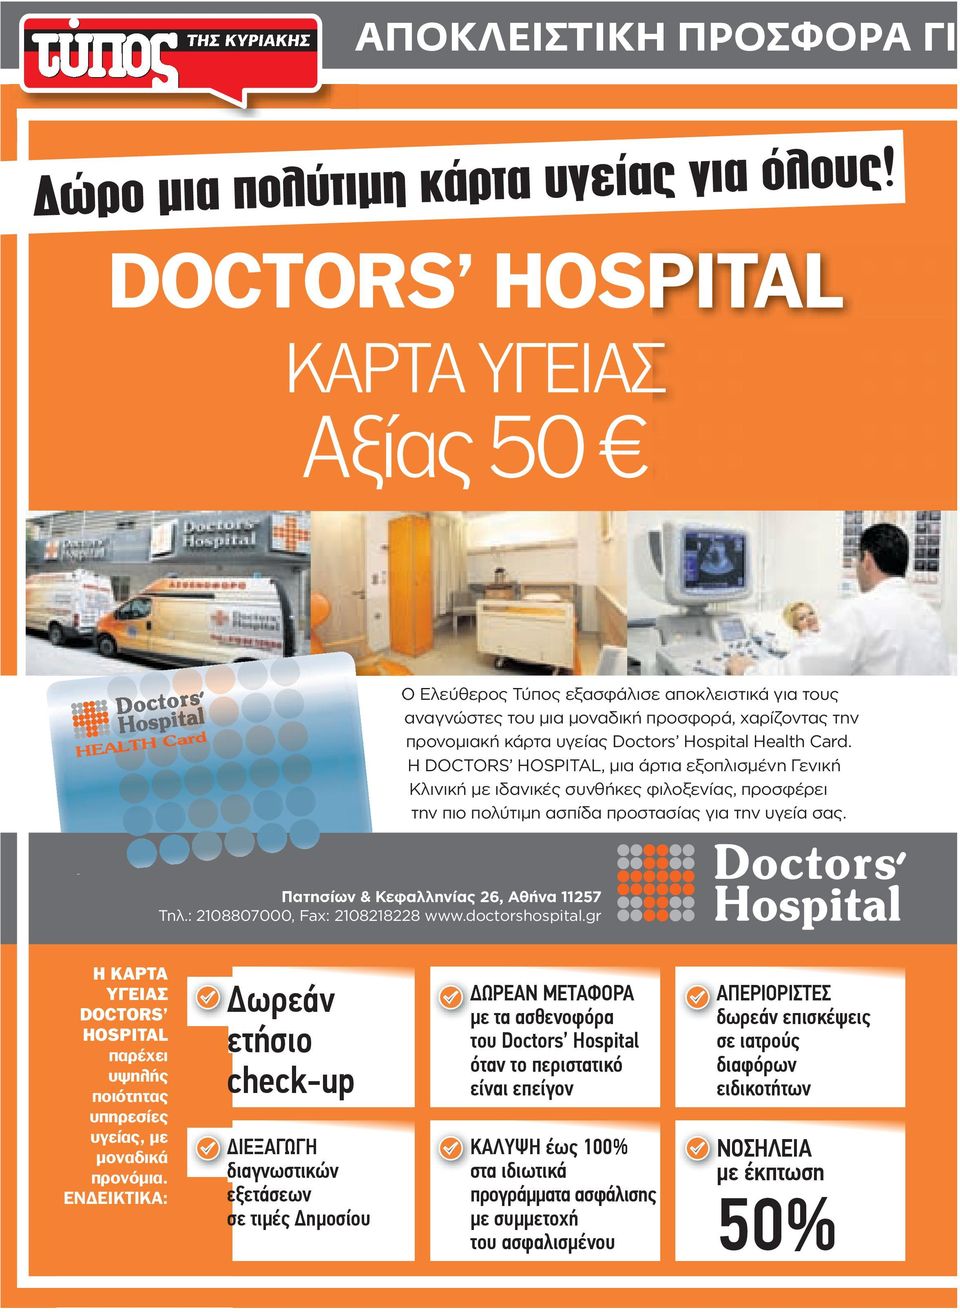 H DOCTORS HOSPITAL, μια άρτια εξοπλισμένη Γενική Κλινική με ιδανικές συνθήκες φιλοξενίας, προσφέρει την πιο πολύτιμη ασπίδα προστασίας για την υγεία σας. Πατησίων & Κεφαλληνίας 26, Αθήνα 11257 Τηλ.